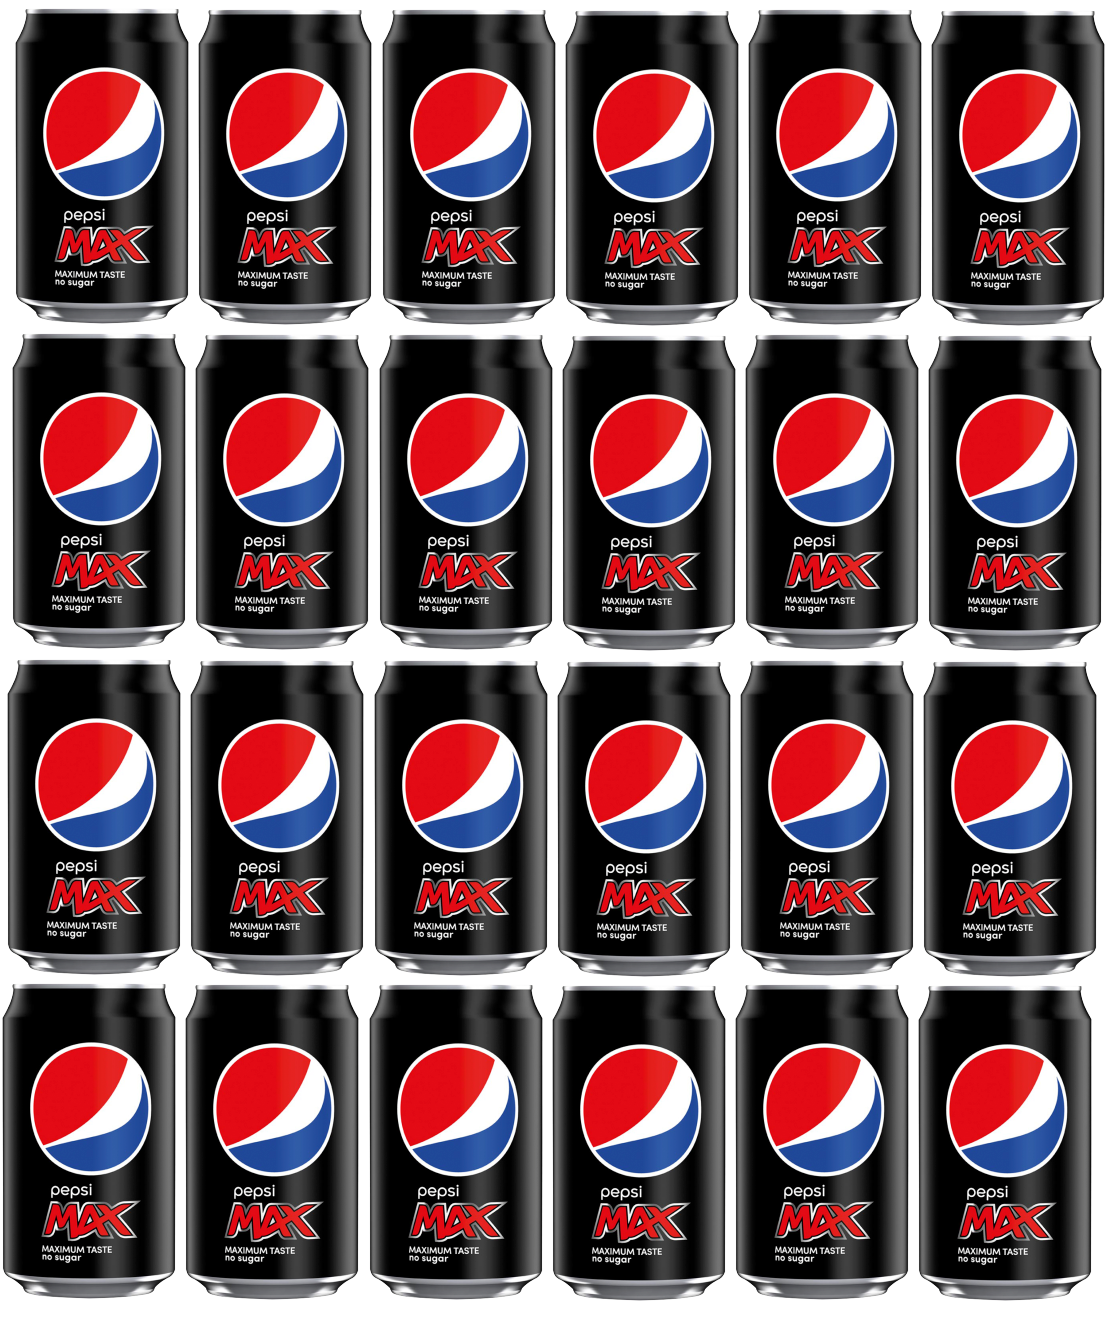 24 x Pepsi Max Cans 330Ml